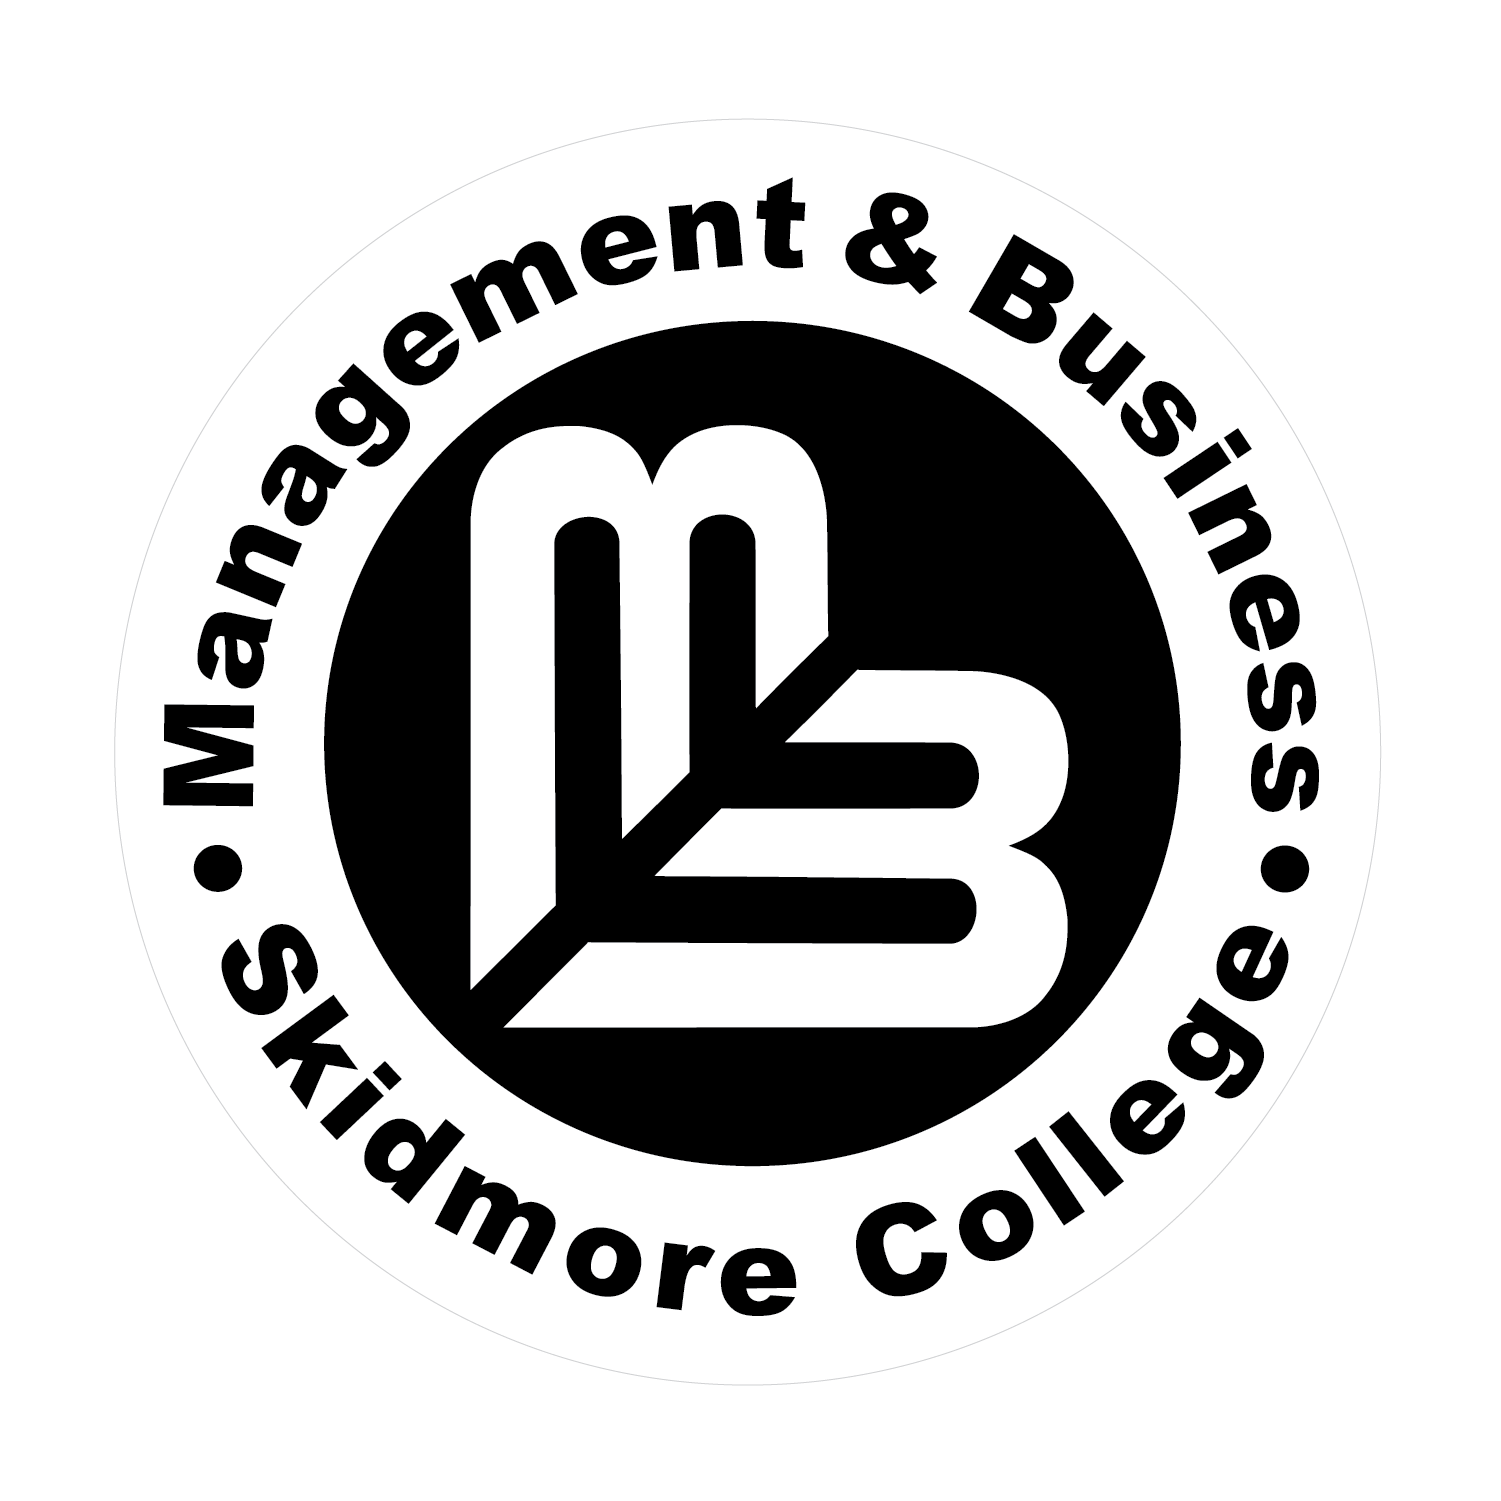 Skidmore College Management & Business Department Identity Development